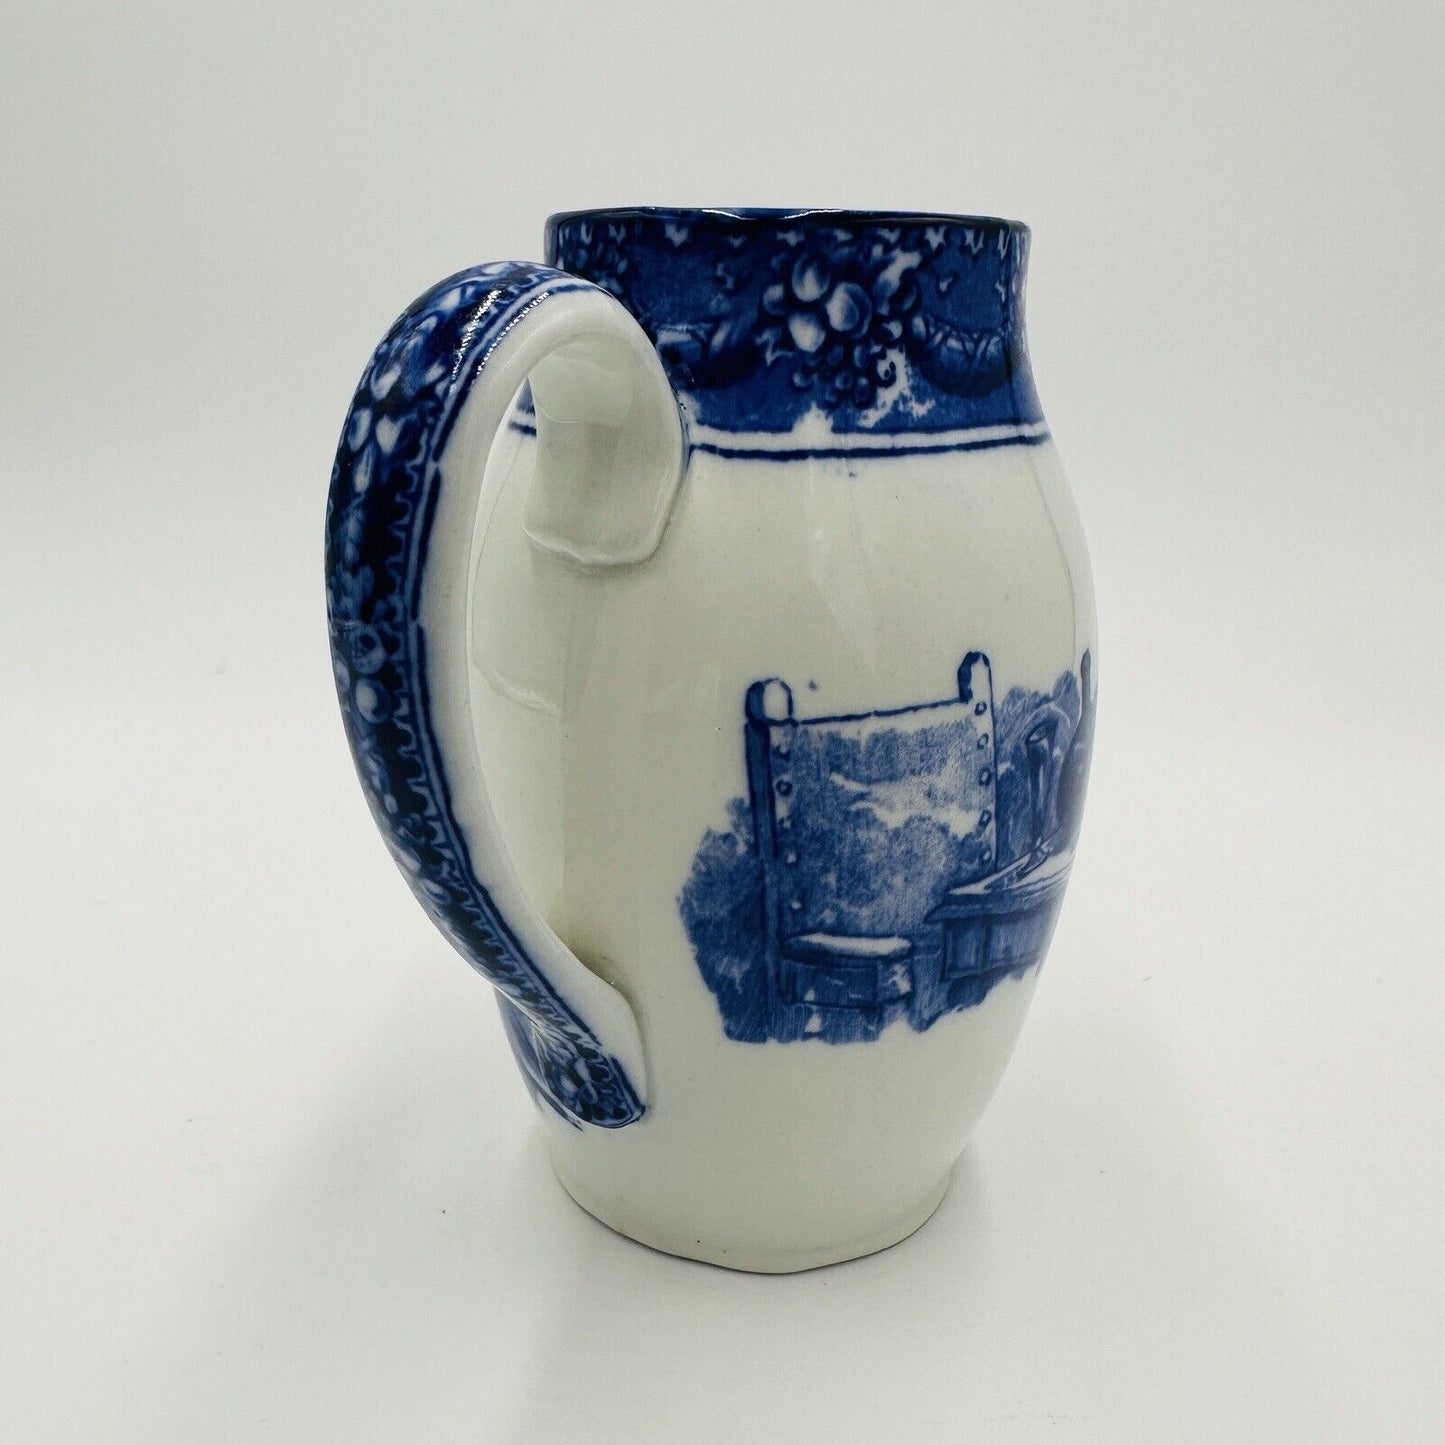 Antique Royal Doulton Pitcher Morissian Flow Blue Pottery The King God Bless Him